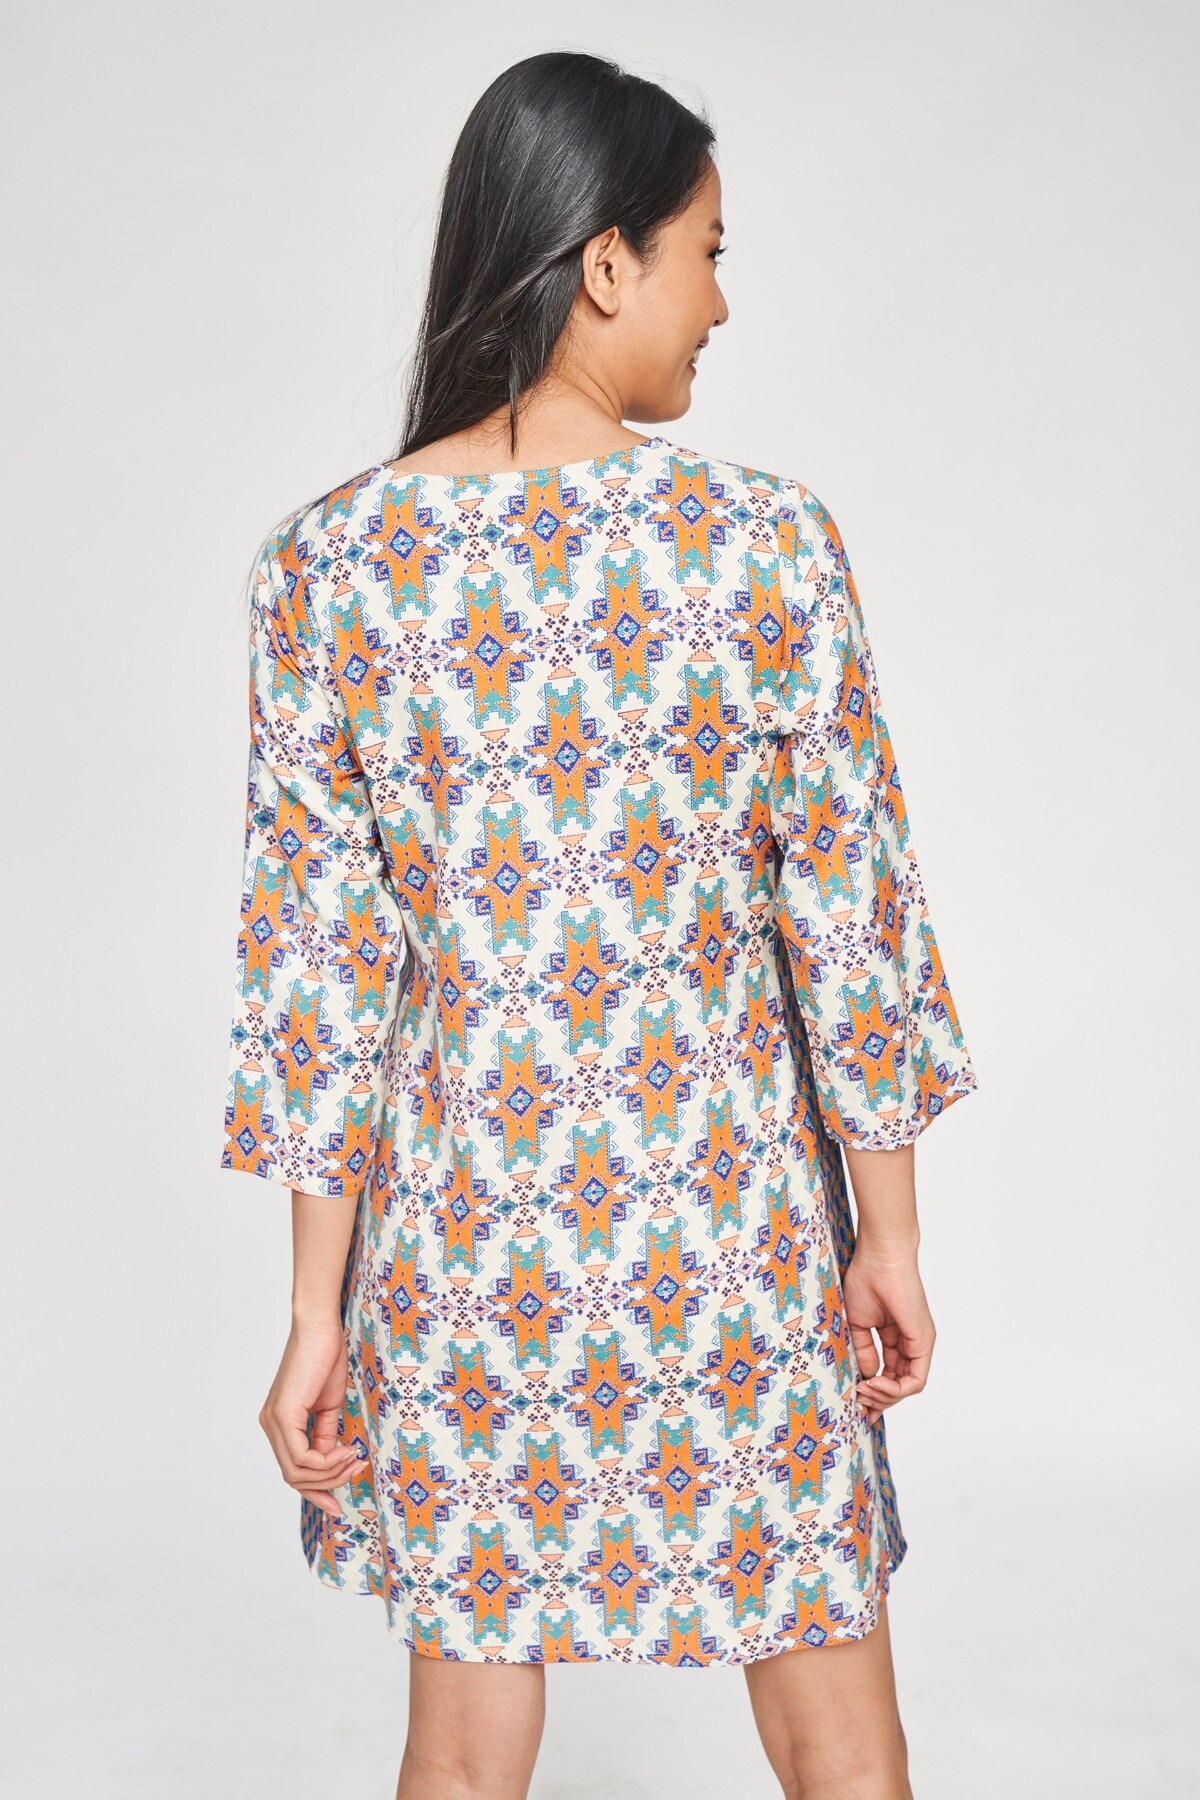 Global Desi | Off White Geometric Printed A-Line Dress 5